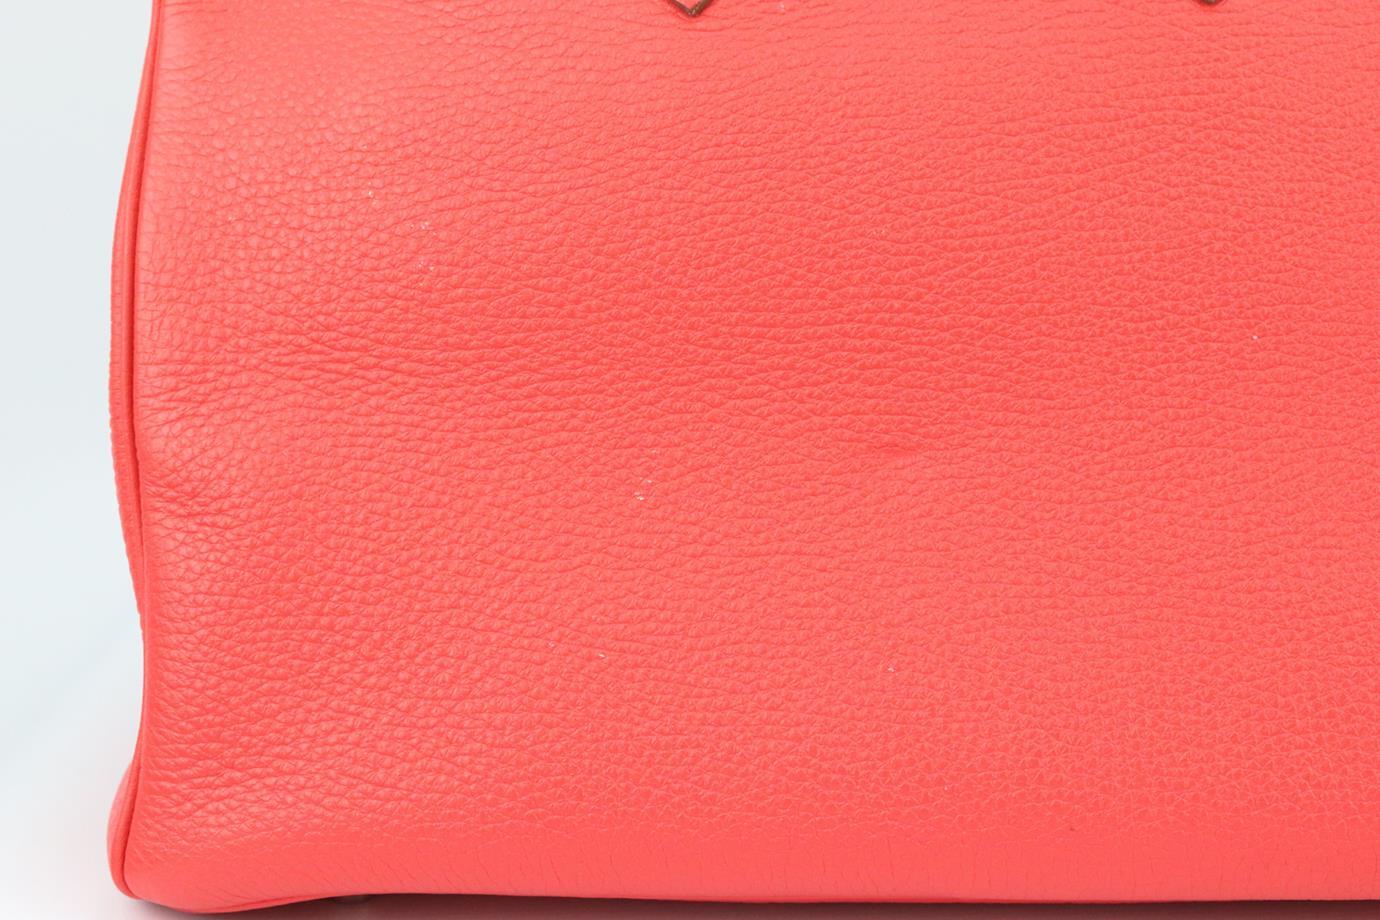 Hermès 2012 Birkin 35cm Togo Leather Bag For Sale 3